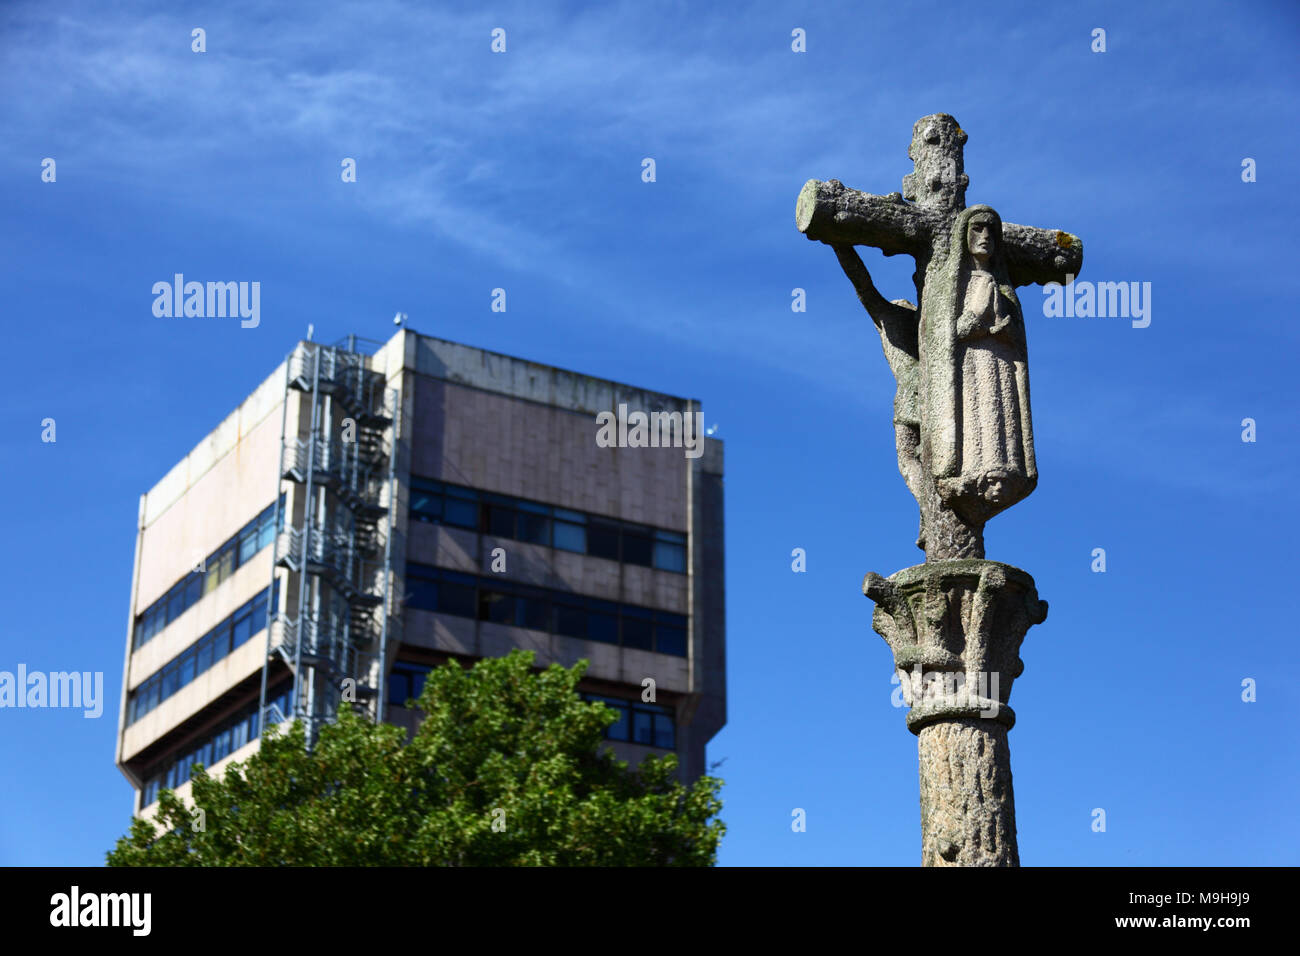 Traditional regional stone calvary cross called a crucero / cruceiro, City Council / Concello building in background, Vigo, Galicia, Spa Stock Photo